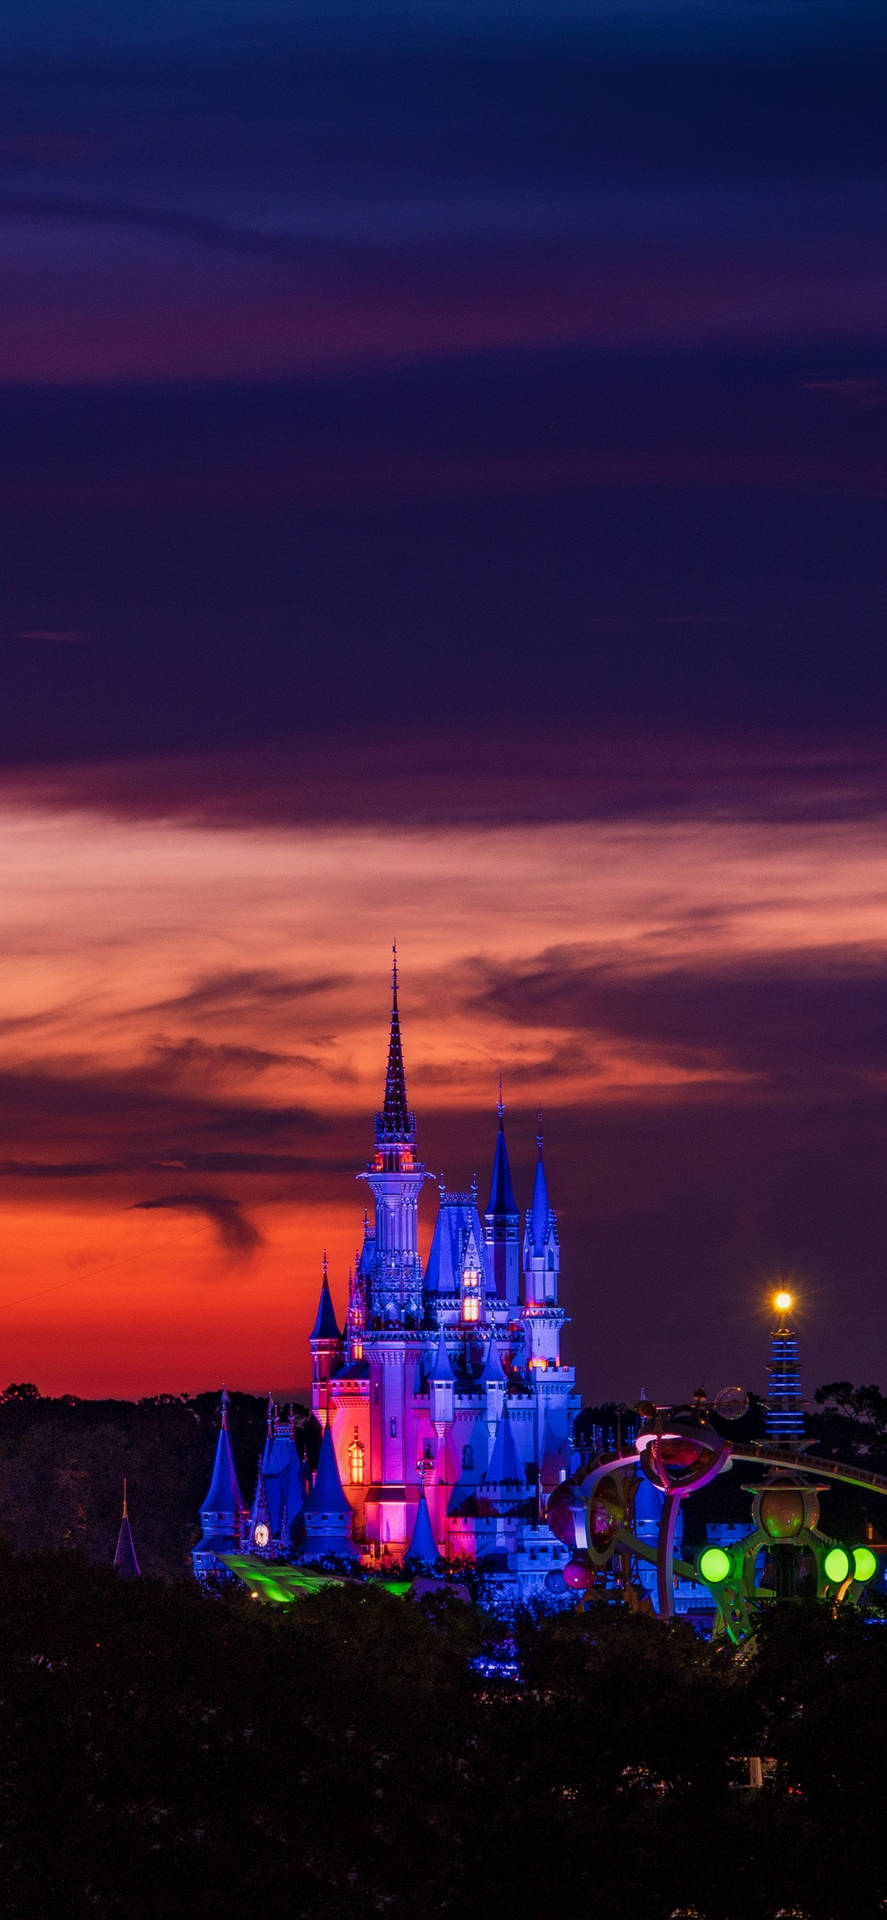 Disney Castle At Night Disney Iphone Wallpaper